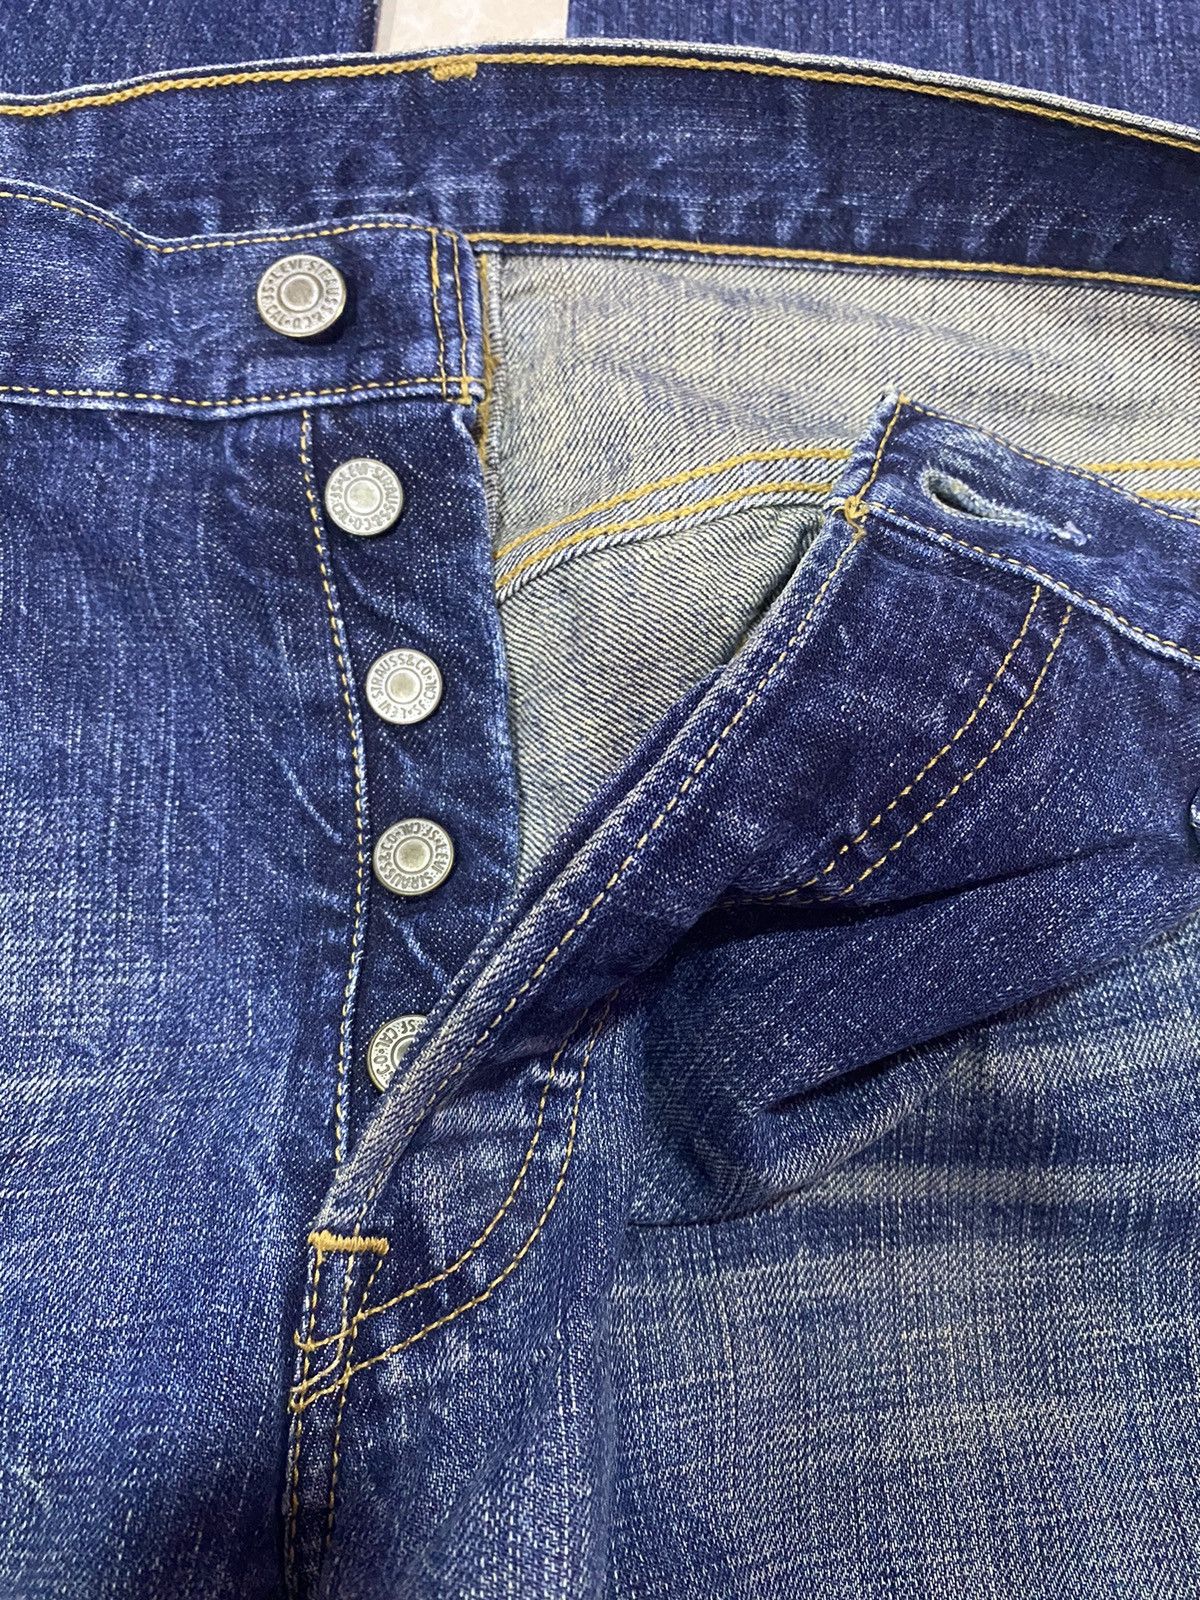 Levi’s San Francisco 501 Denim Jeans - 5